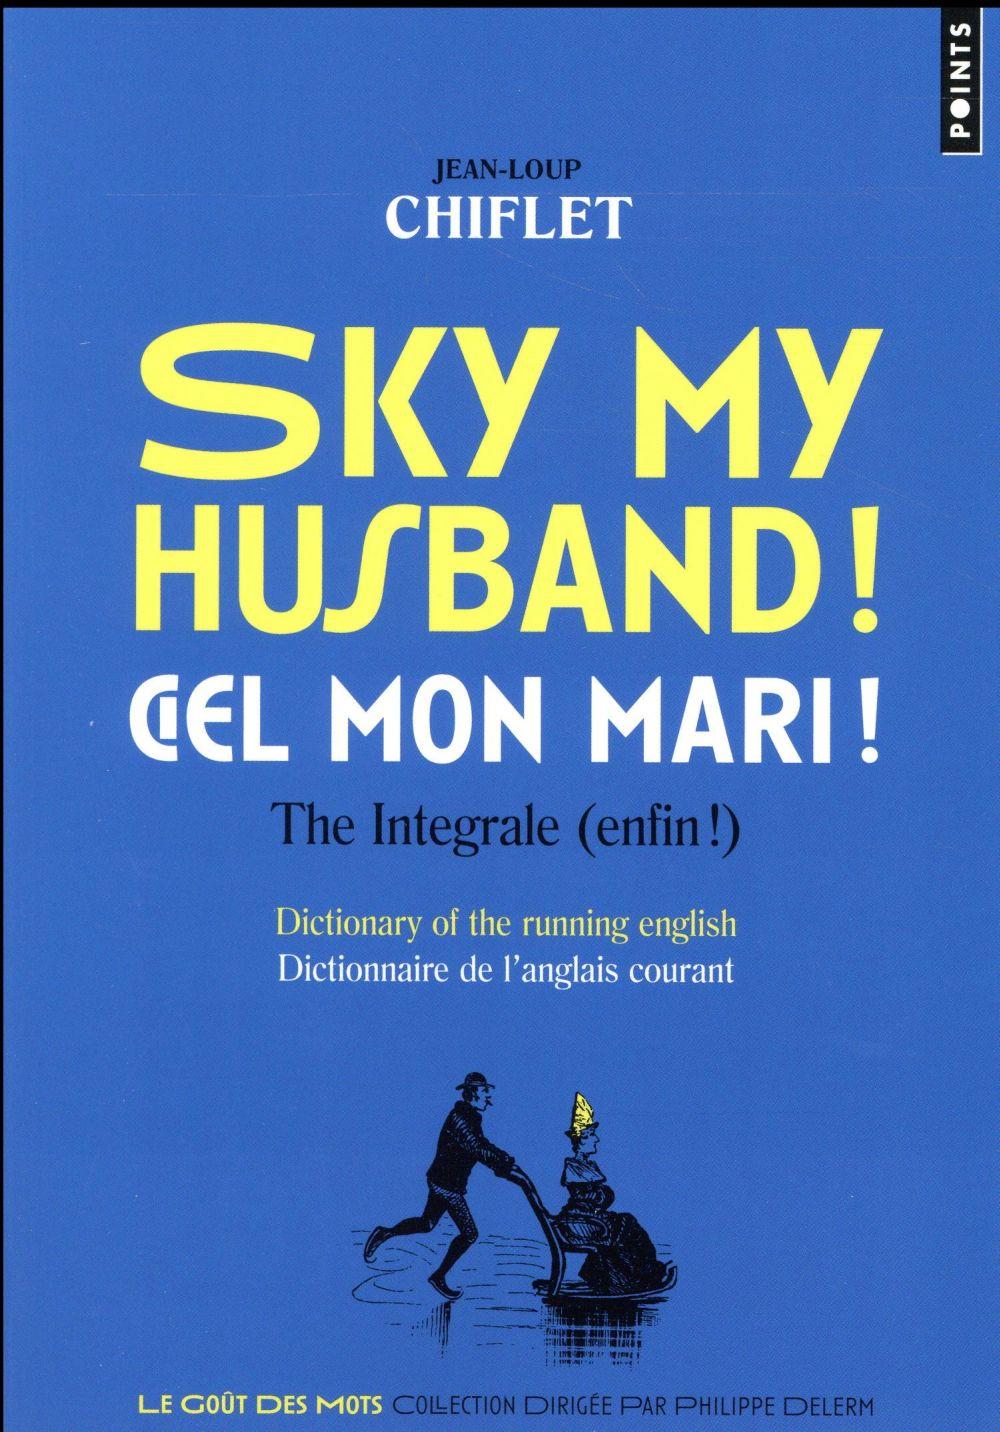 Vente Livre :                                    Sky my husband! ciel mon mari ! the integrale (enfin !)
- Jean-Loup Chiflet                                     